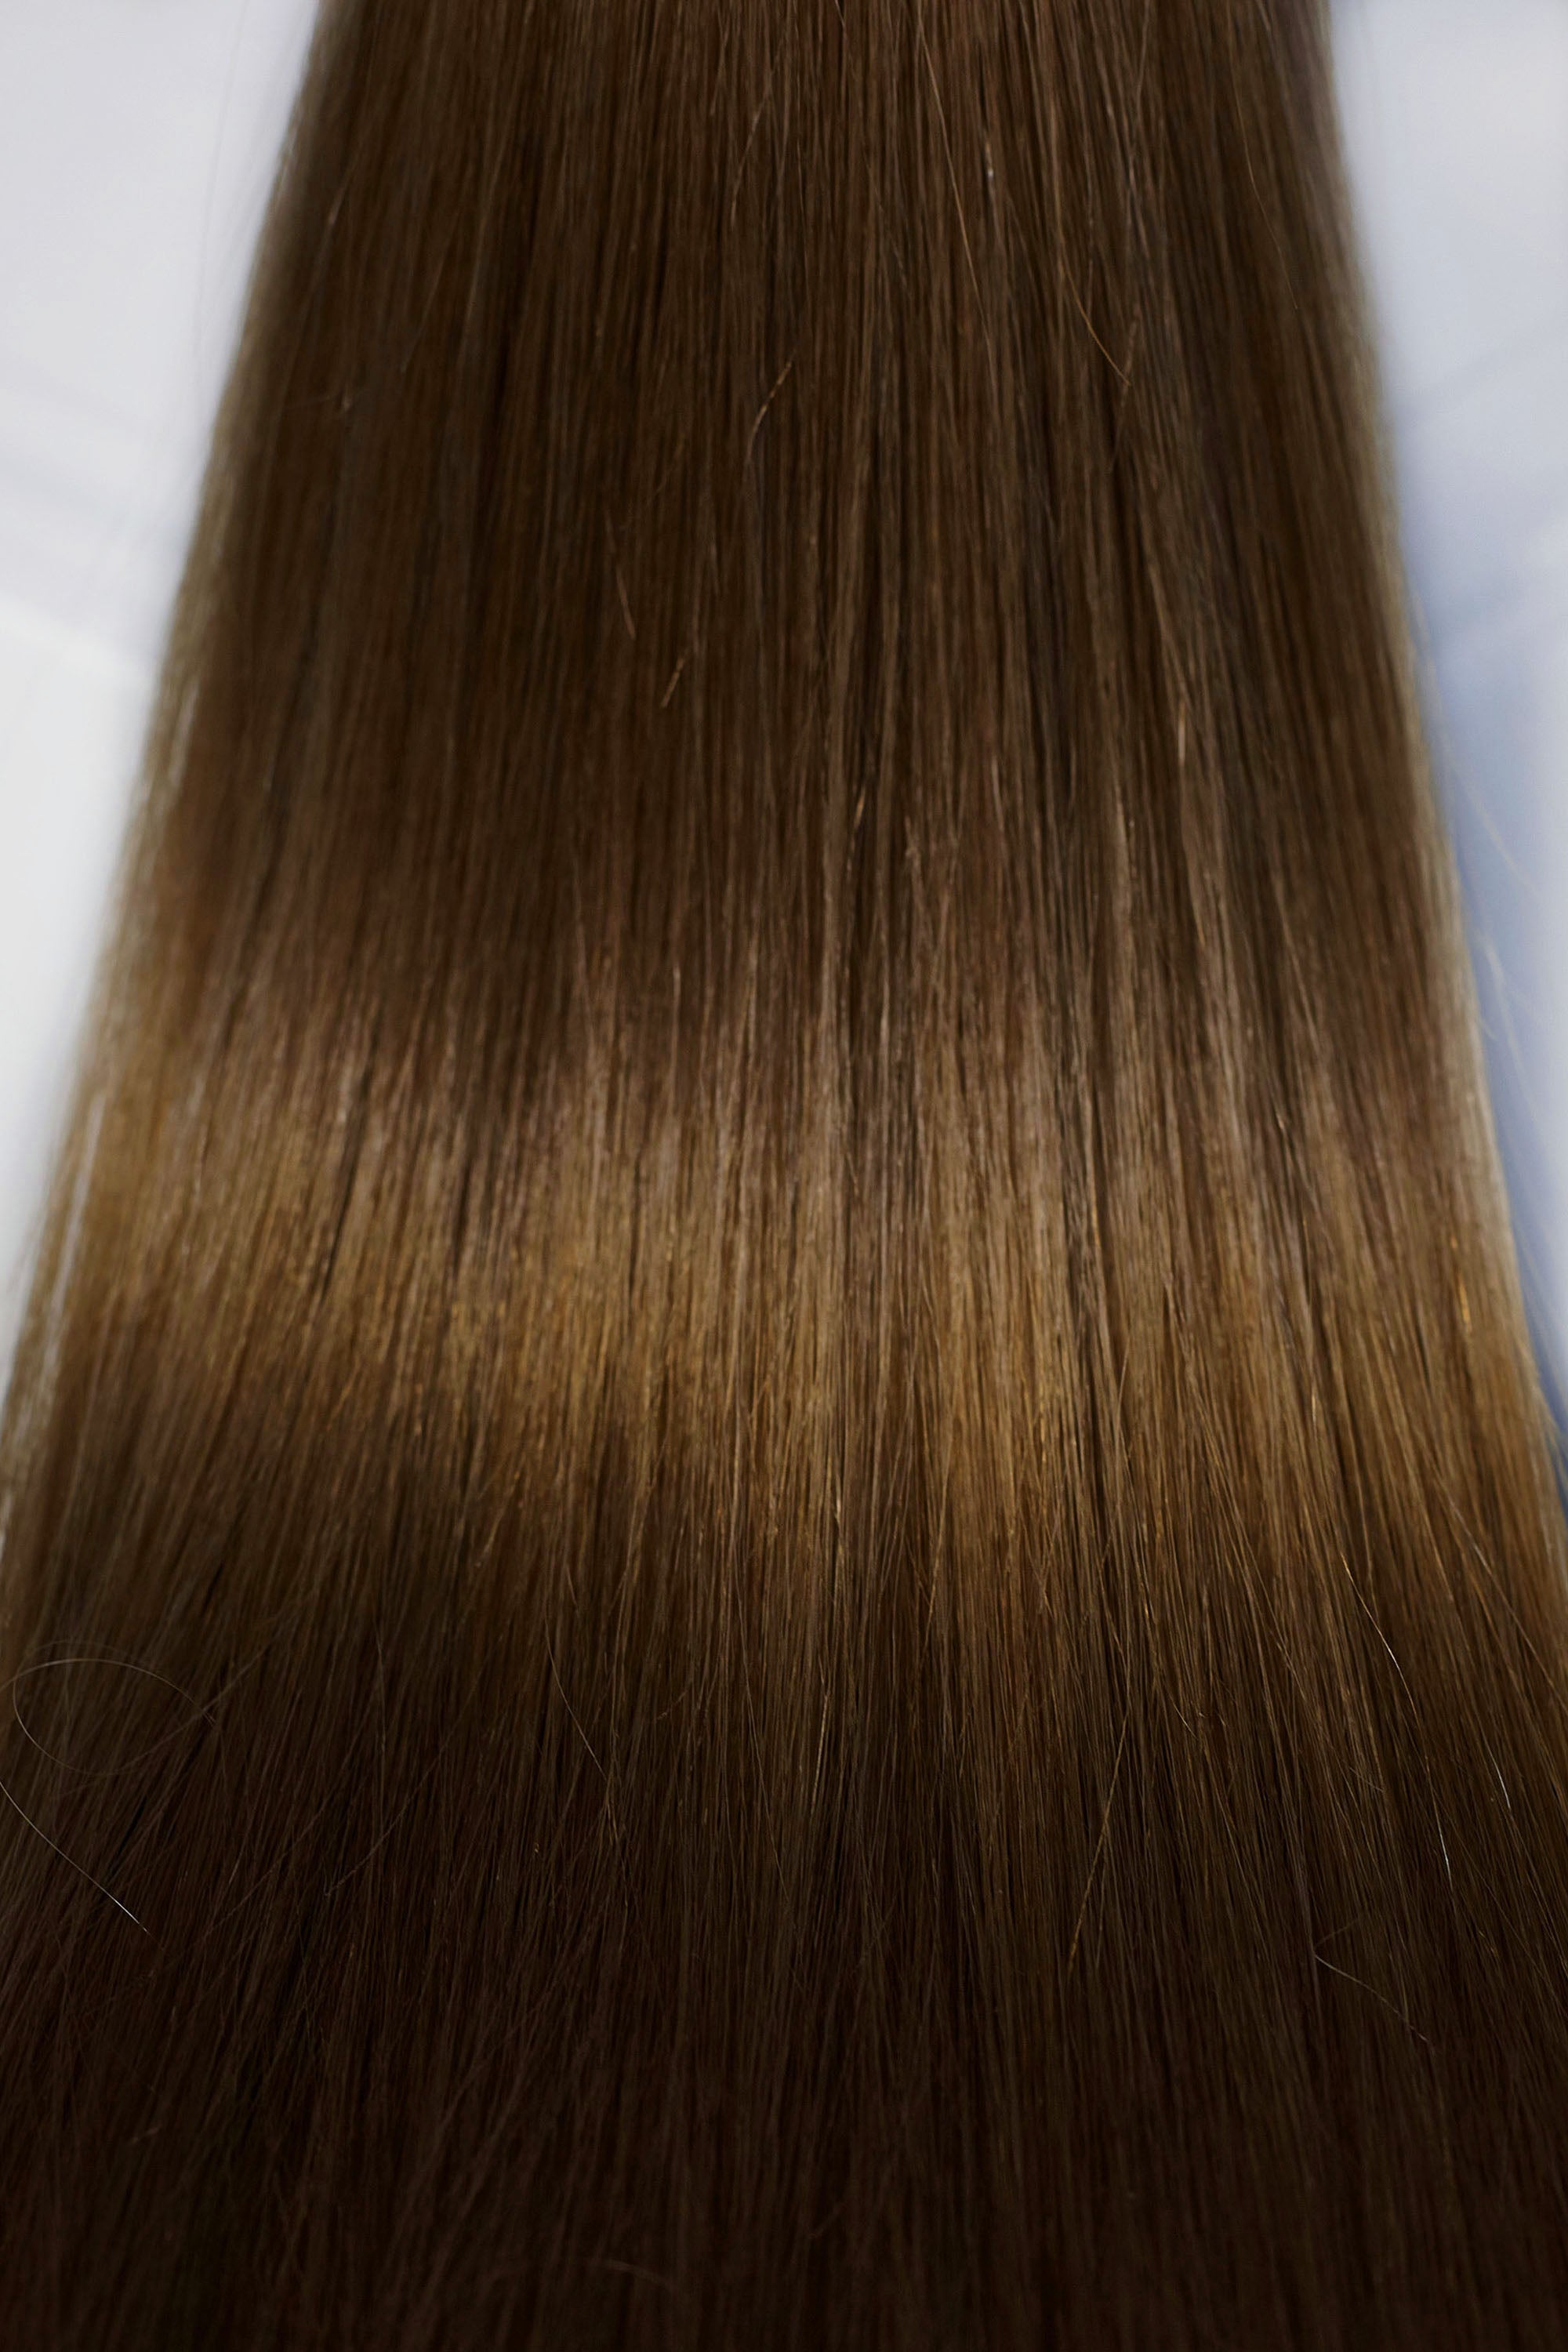 Behair professional Bulk hair "Premium" 20" (50cm) Natural Straight Honey Walnut Brown #5 - 25g hair extensions